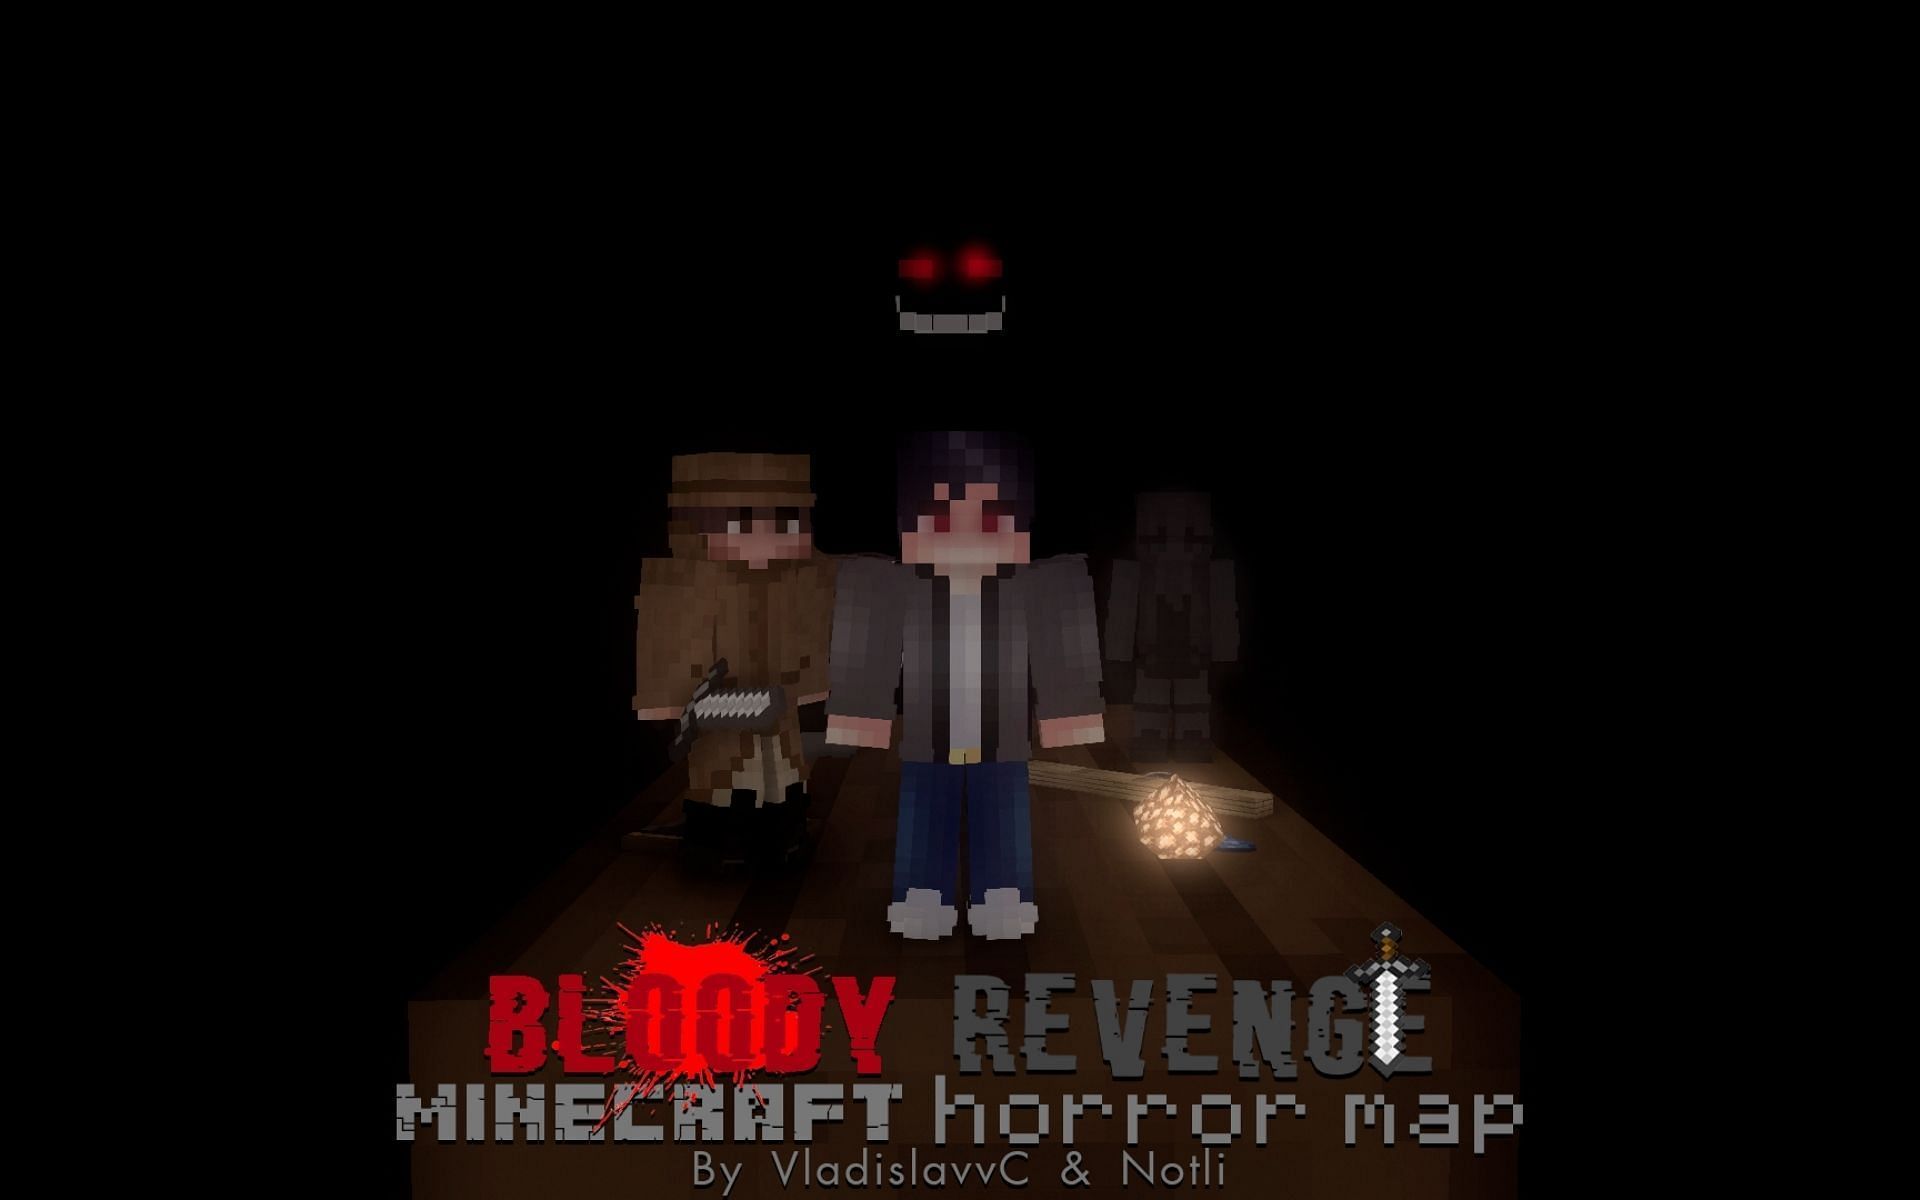 Bloody Revenge (Image via Minecraft Maps)